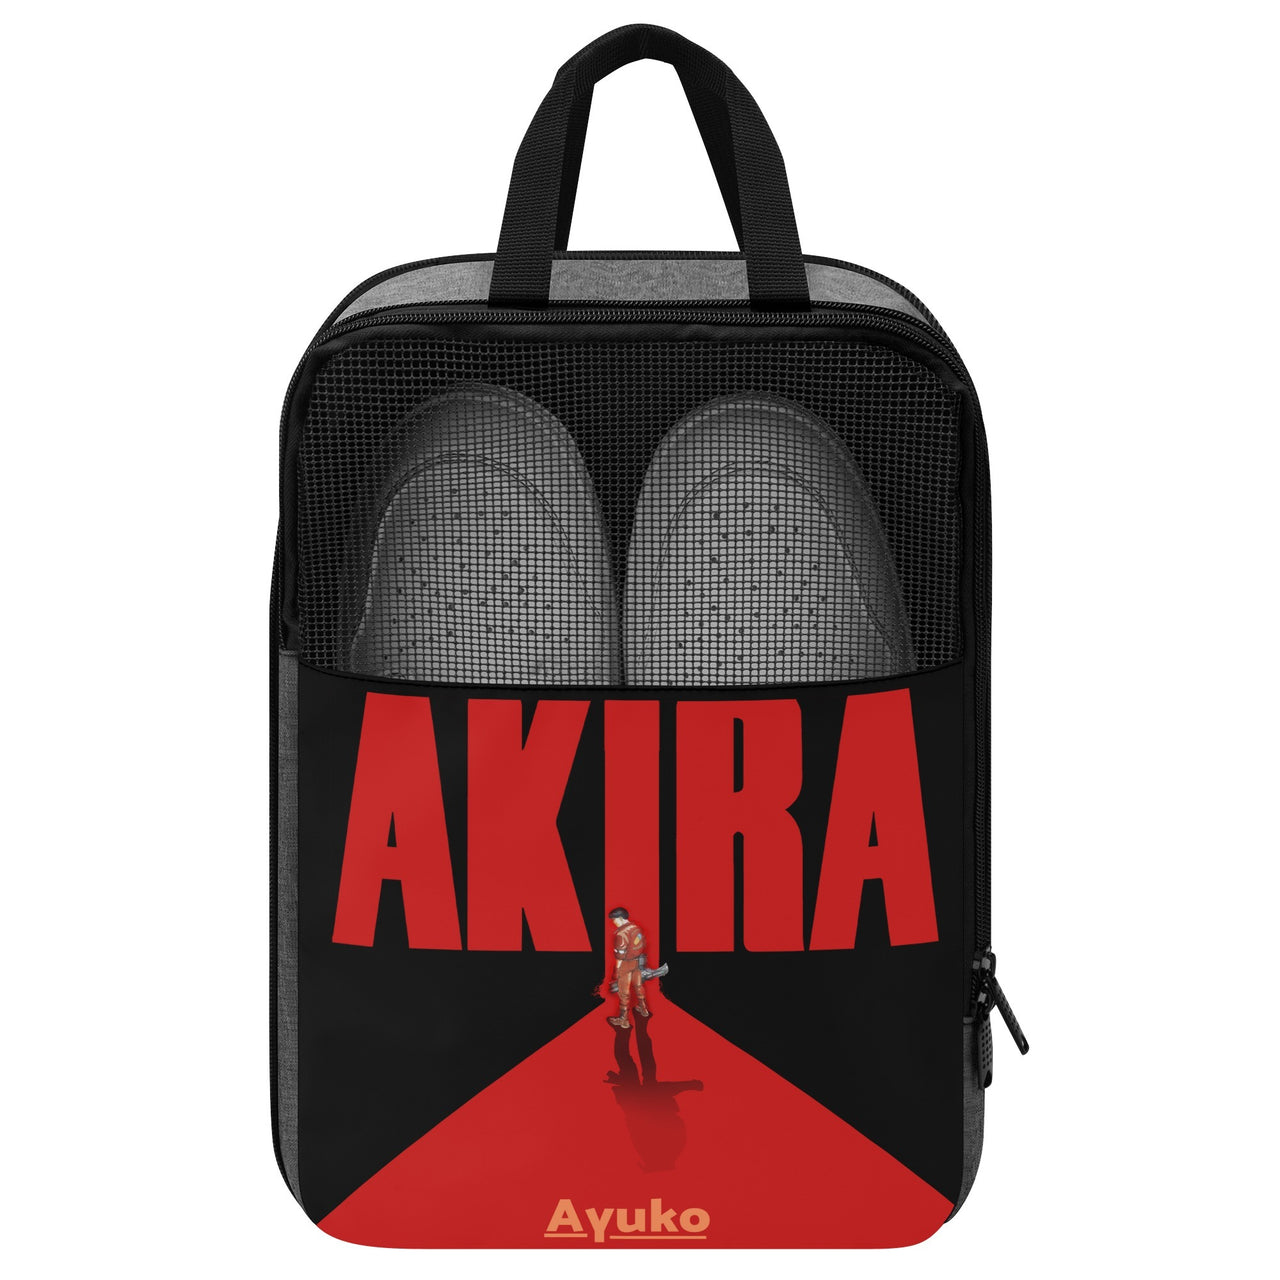 Borsa per scarpe Akira